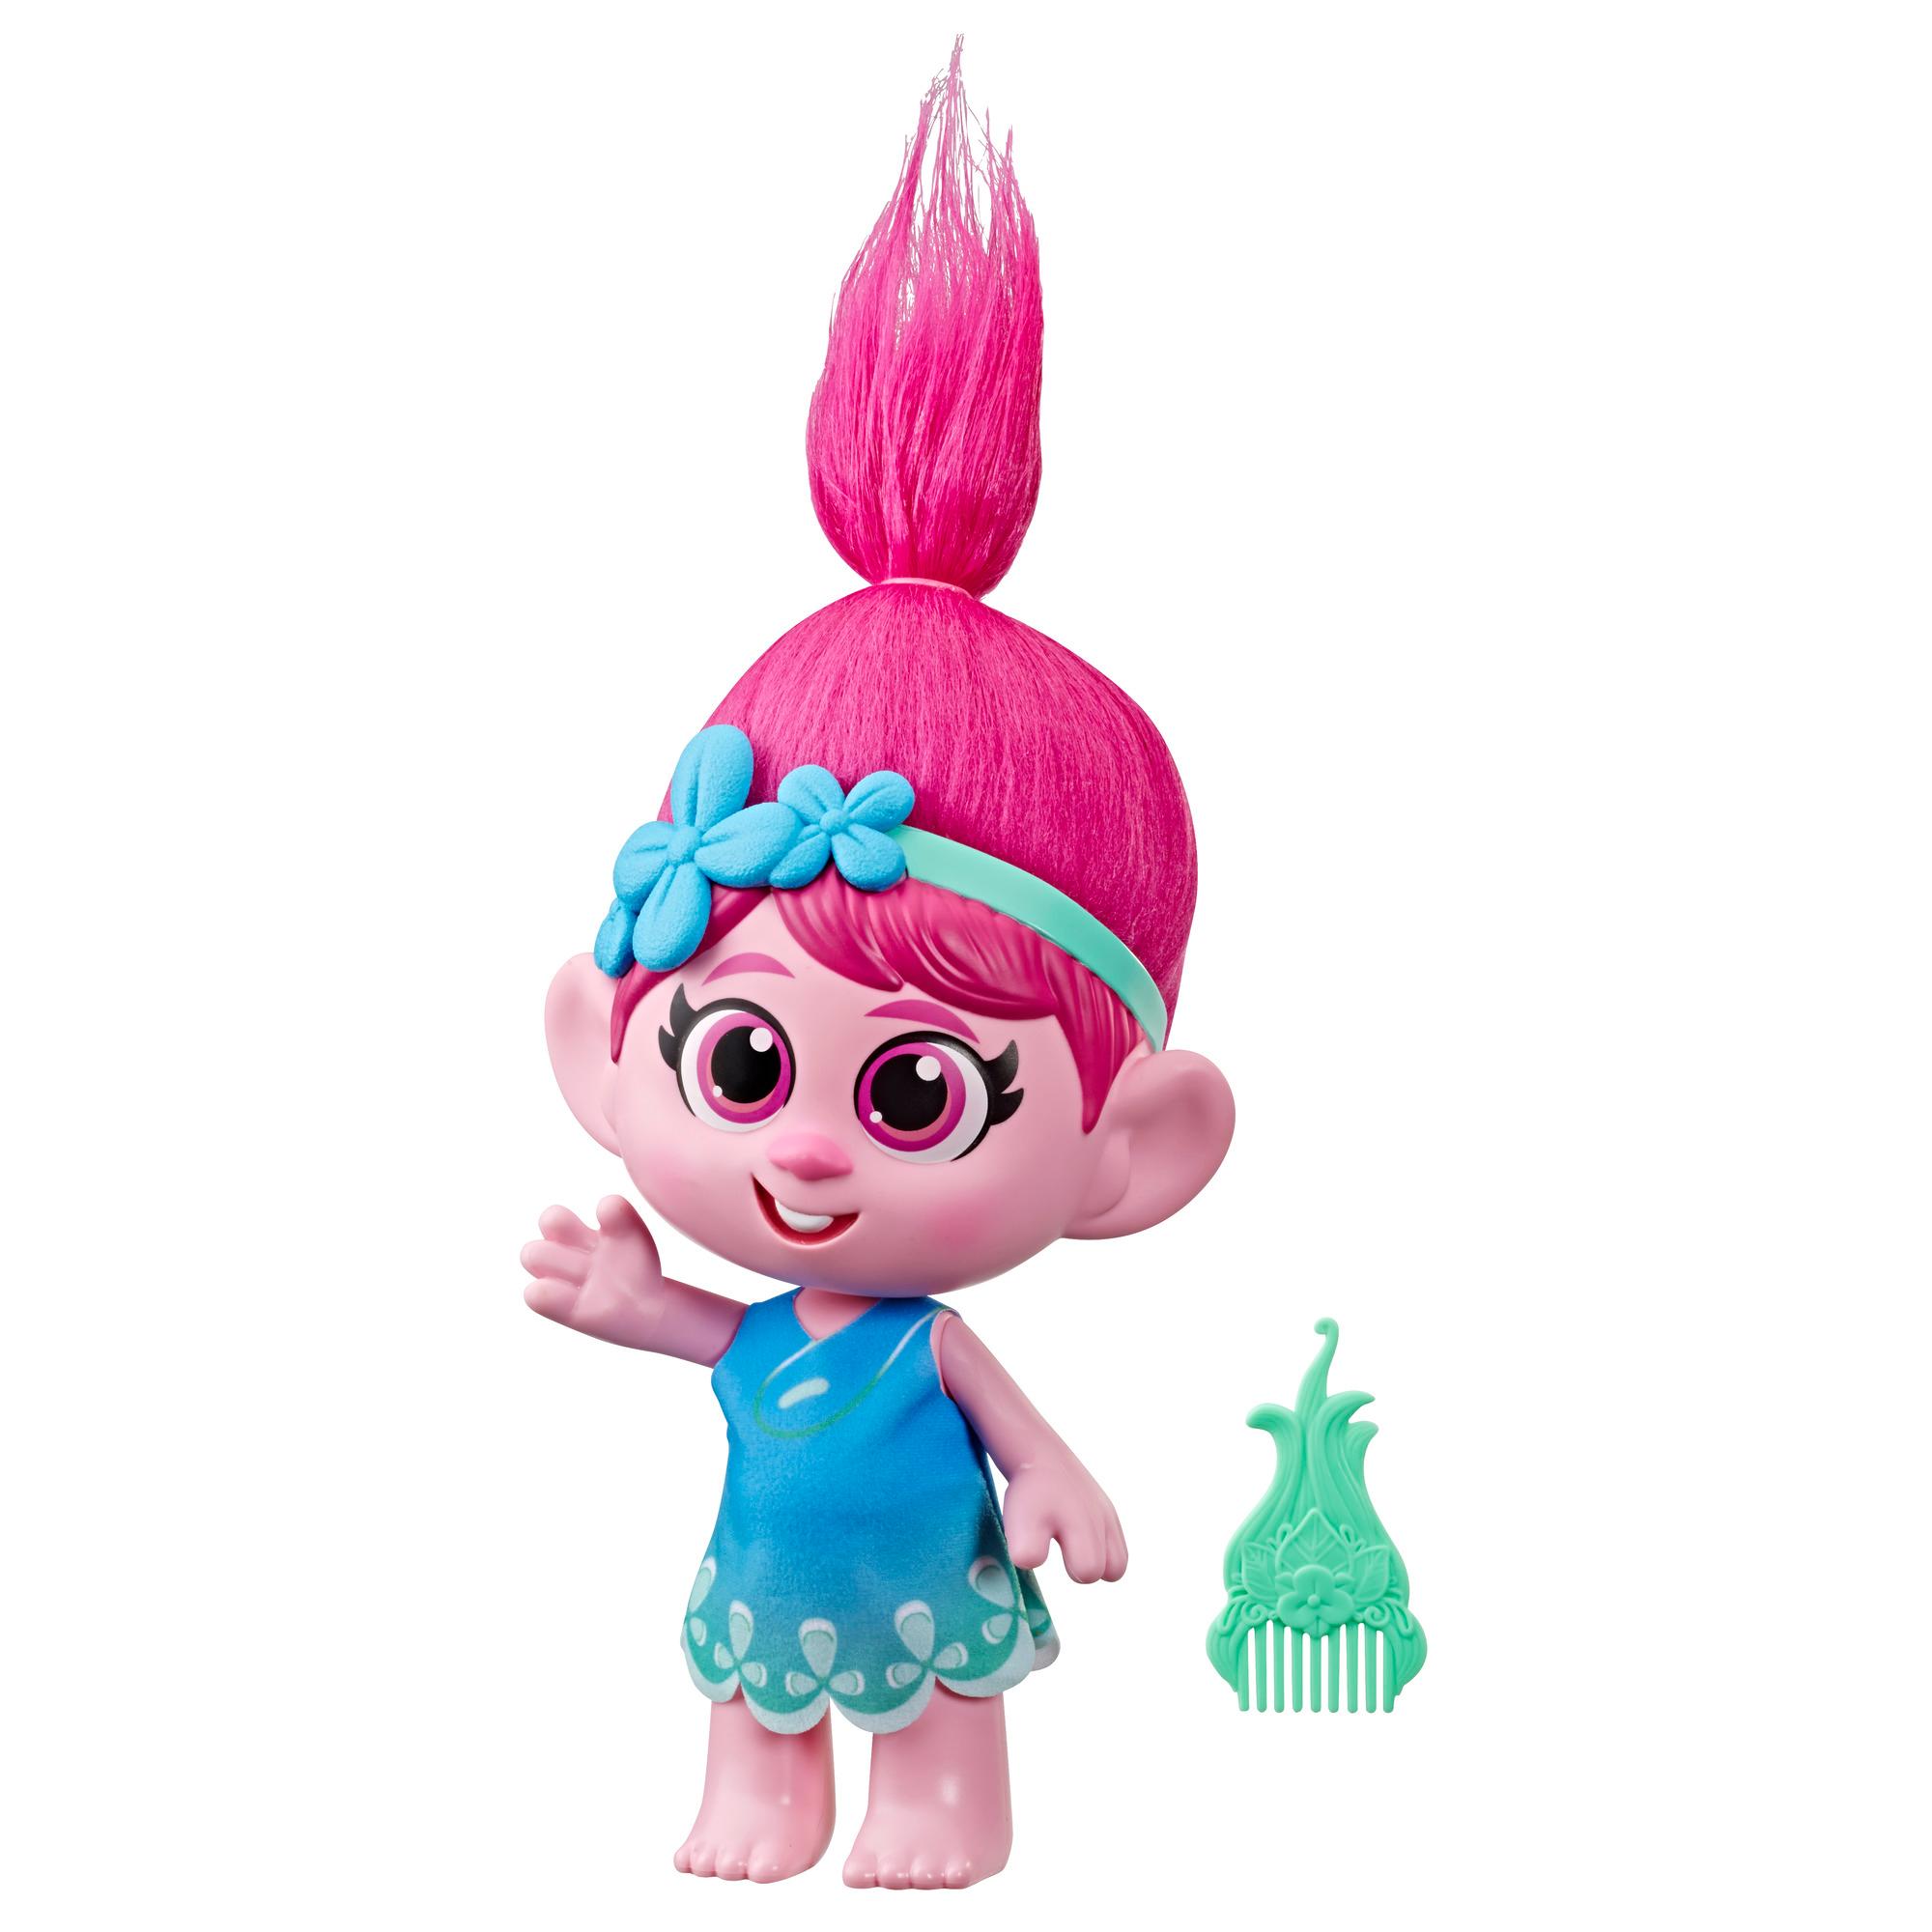 DreamWorks Trolls World Tour - Niña Poppy - Figura de Poppy con vestido removible y peine, inspirada en la película Trolls 2